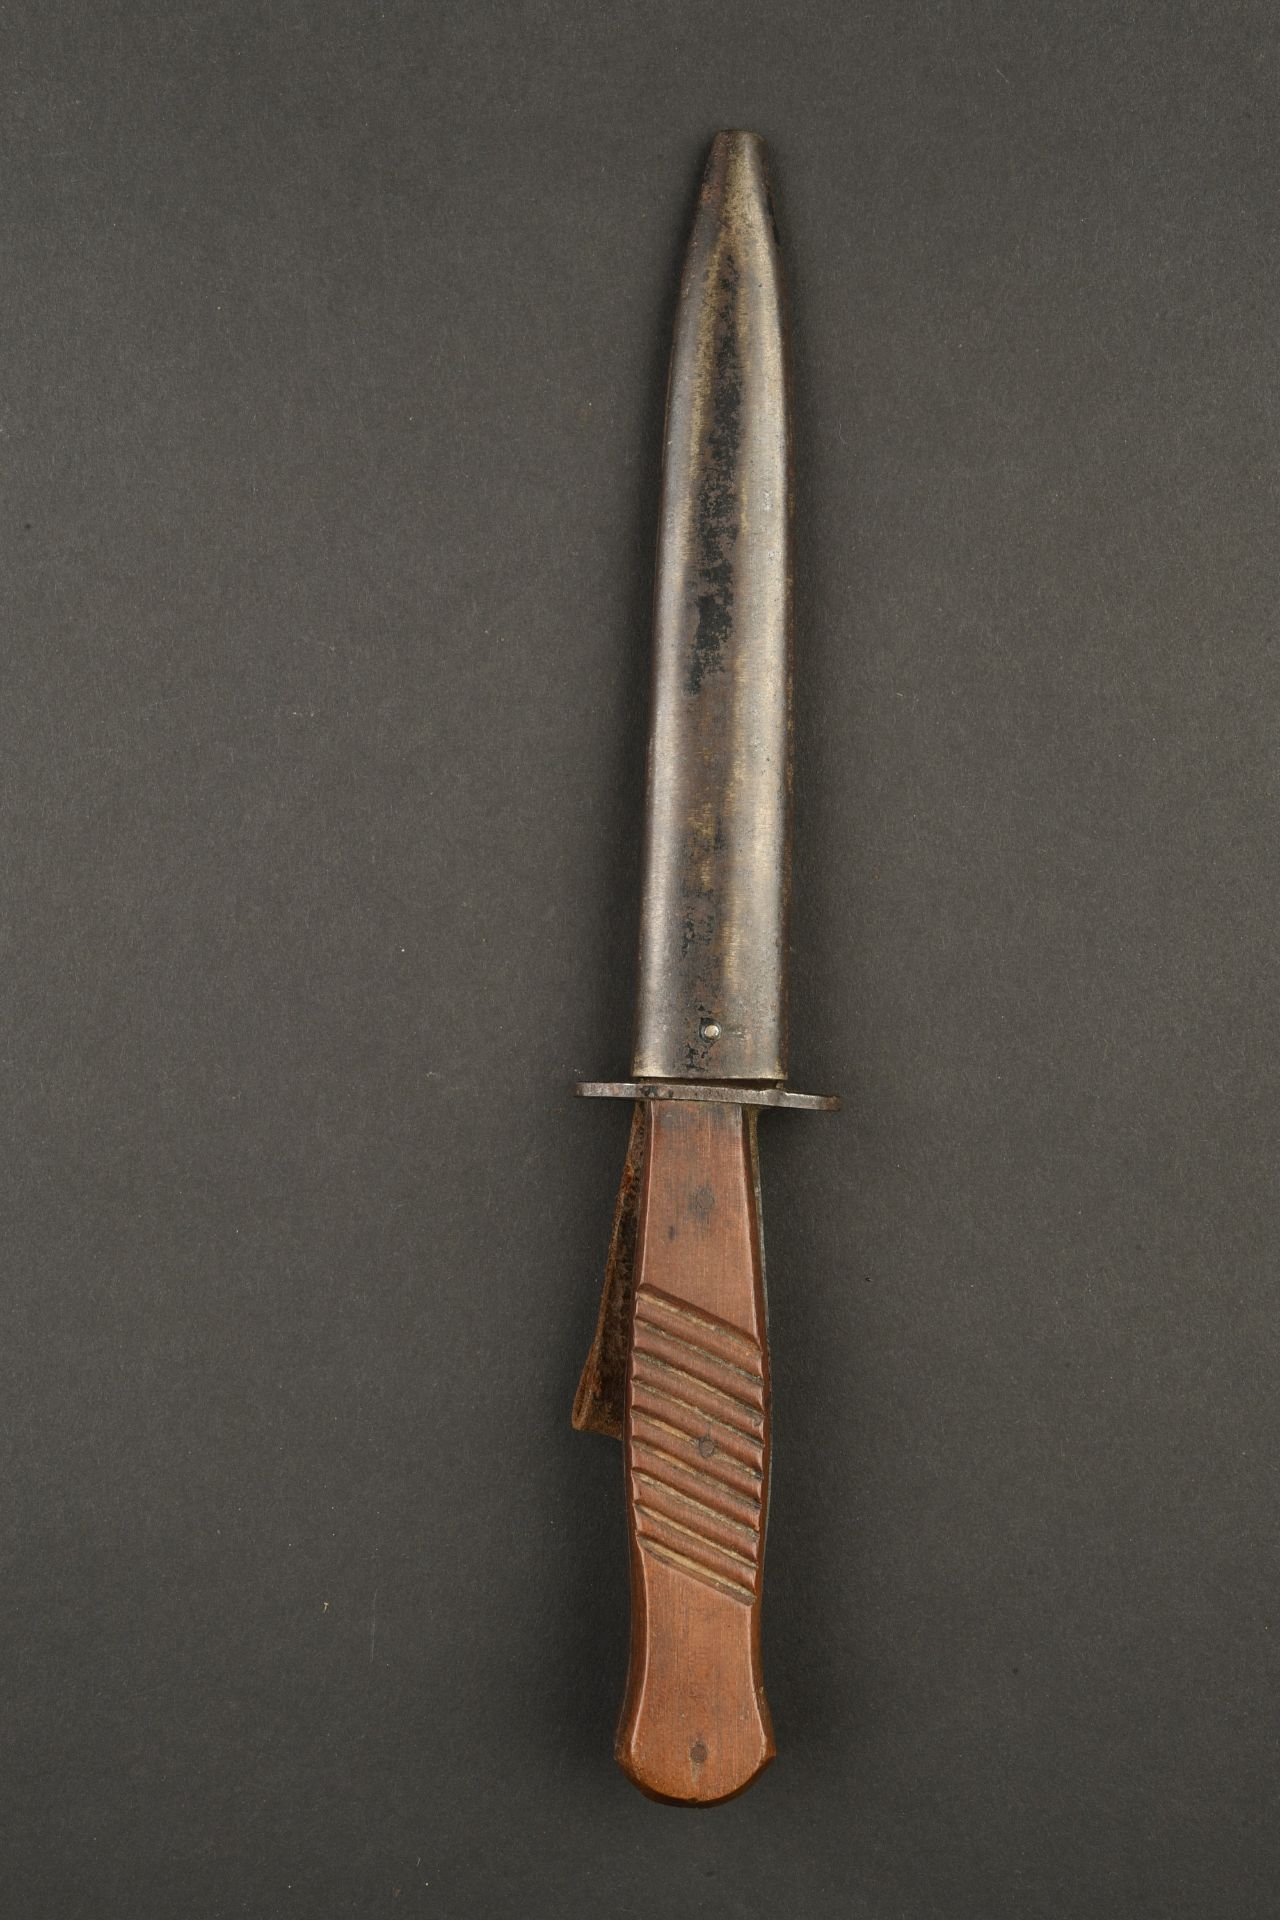 Poignard de tranchee. trench dagger - Image 2 of 3